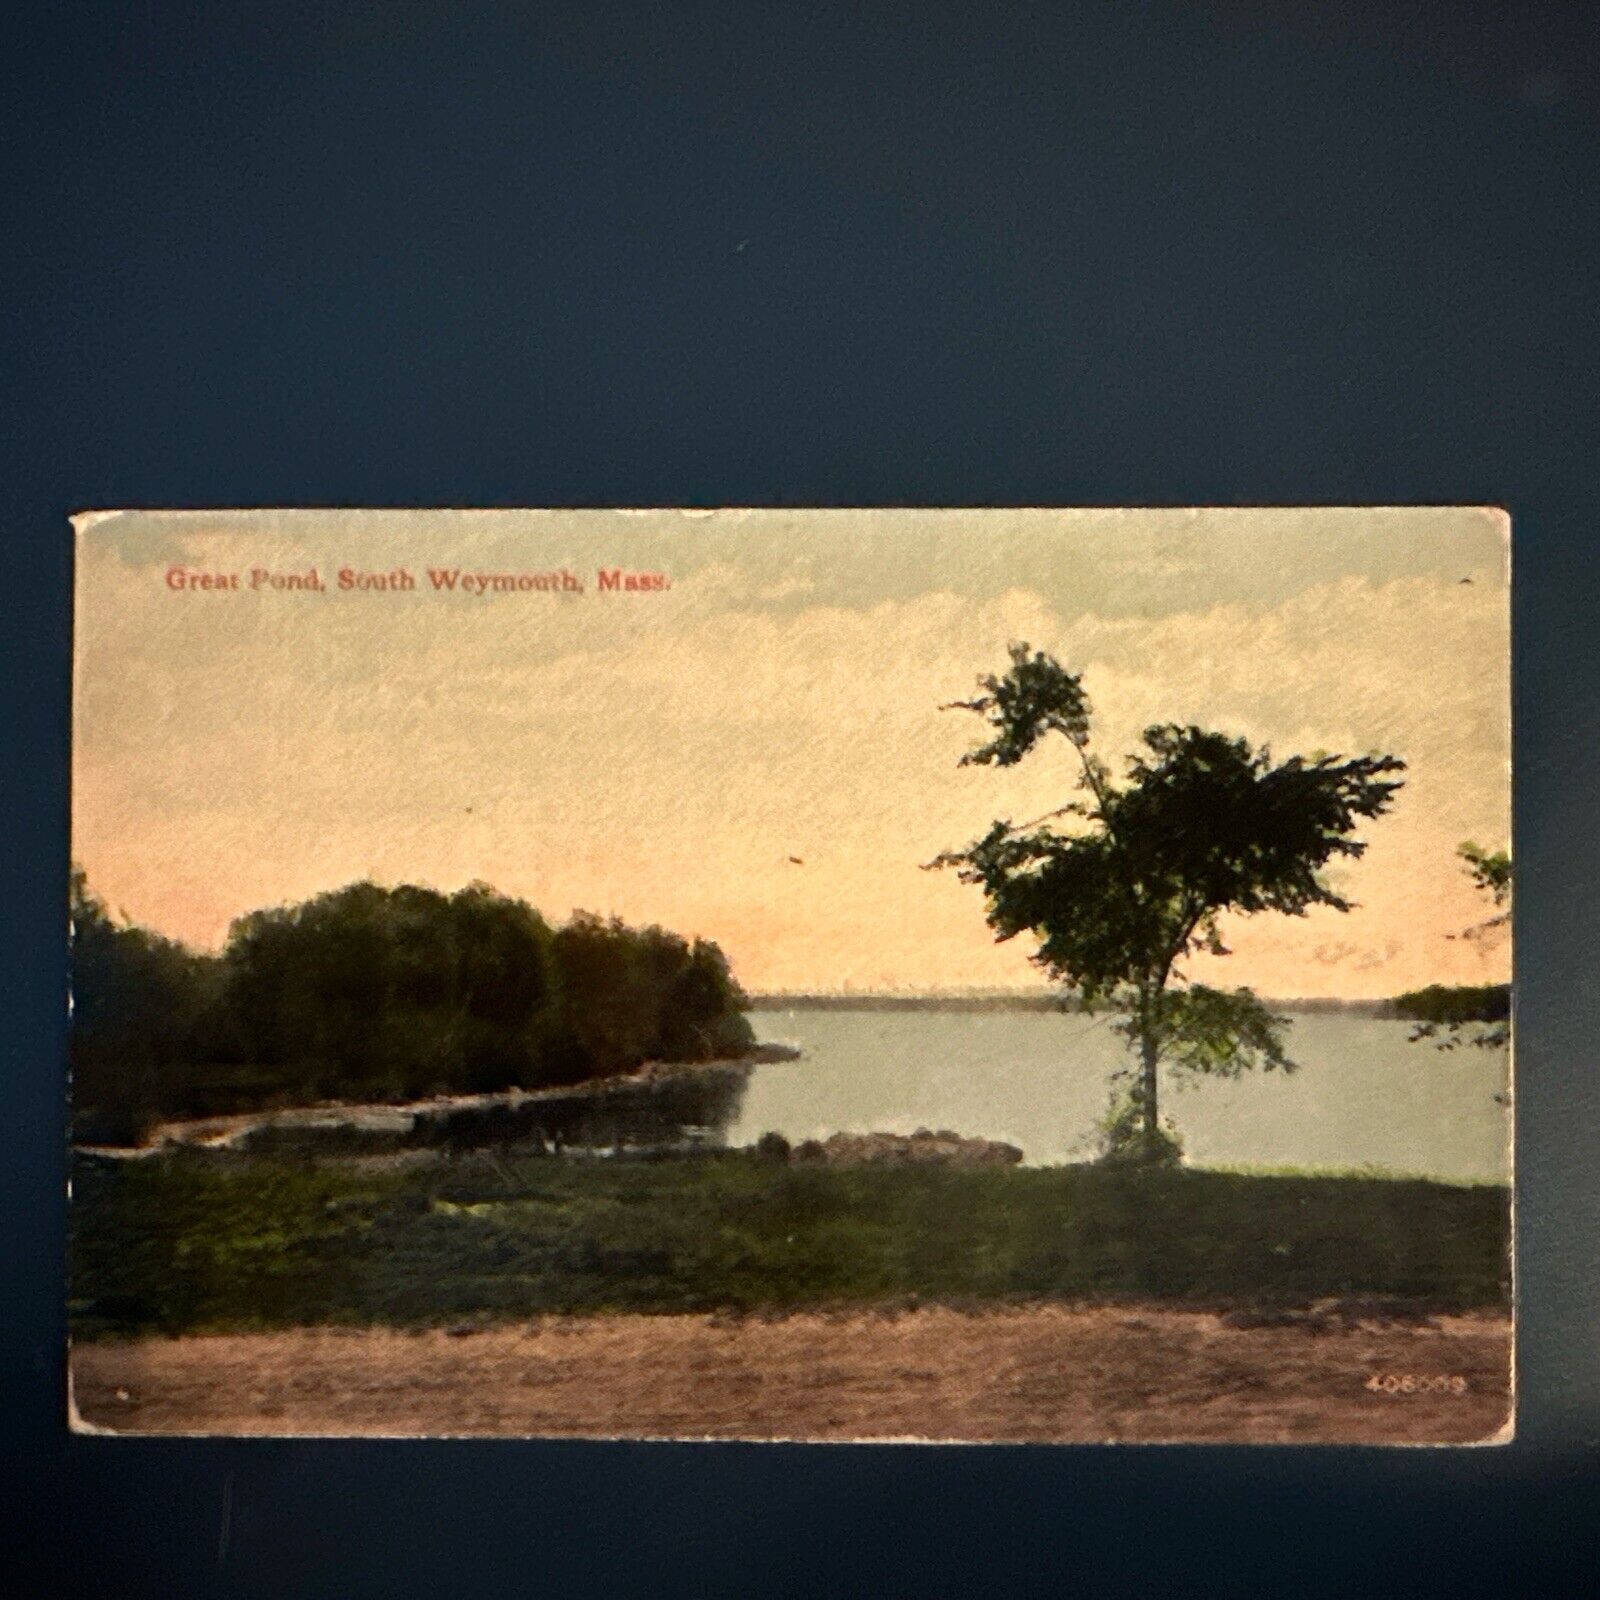 Great Pond, South Weymouth Massachusetts vintage 1912 postcard